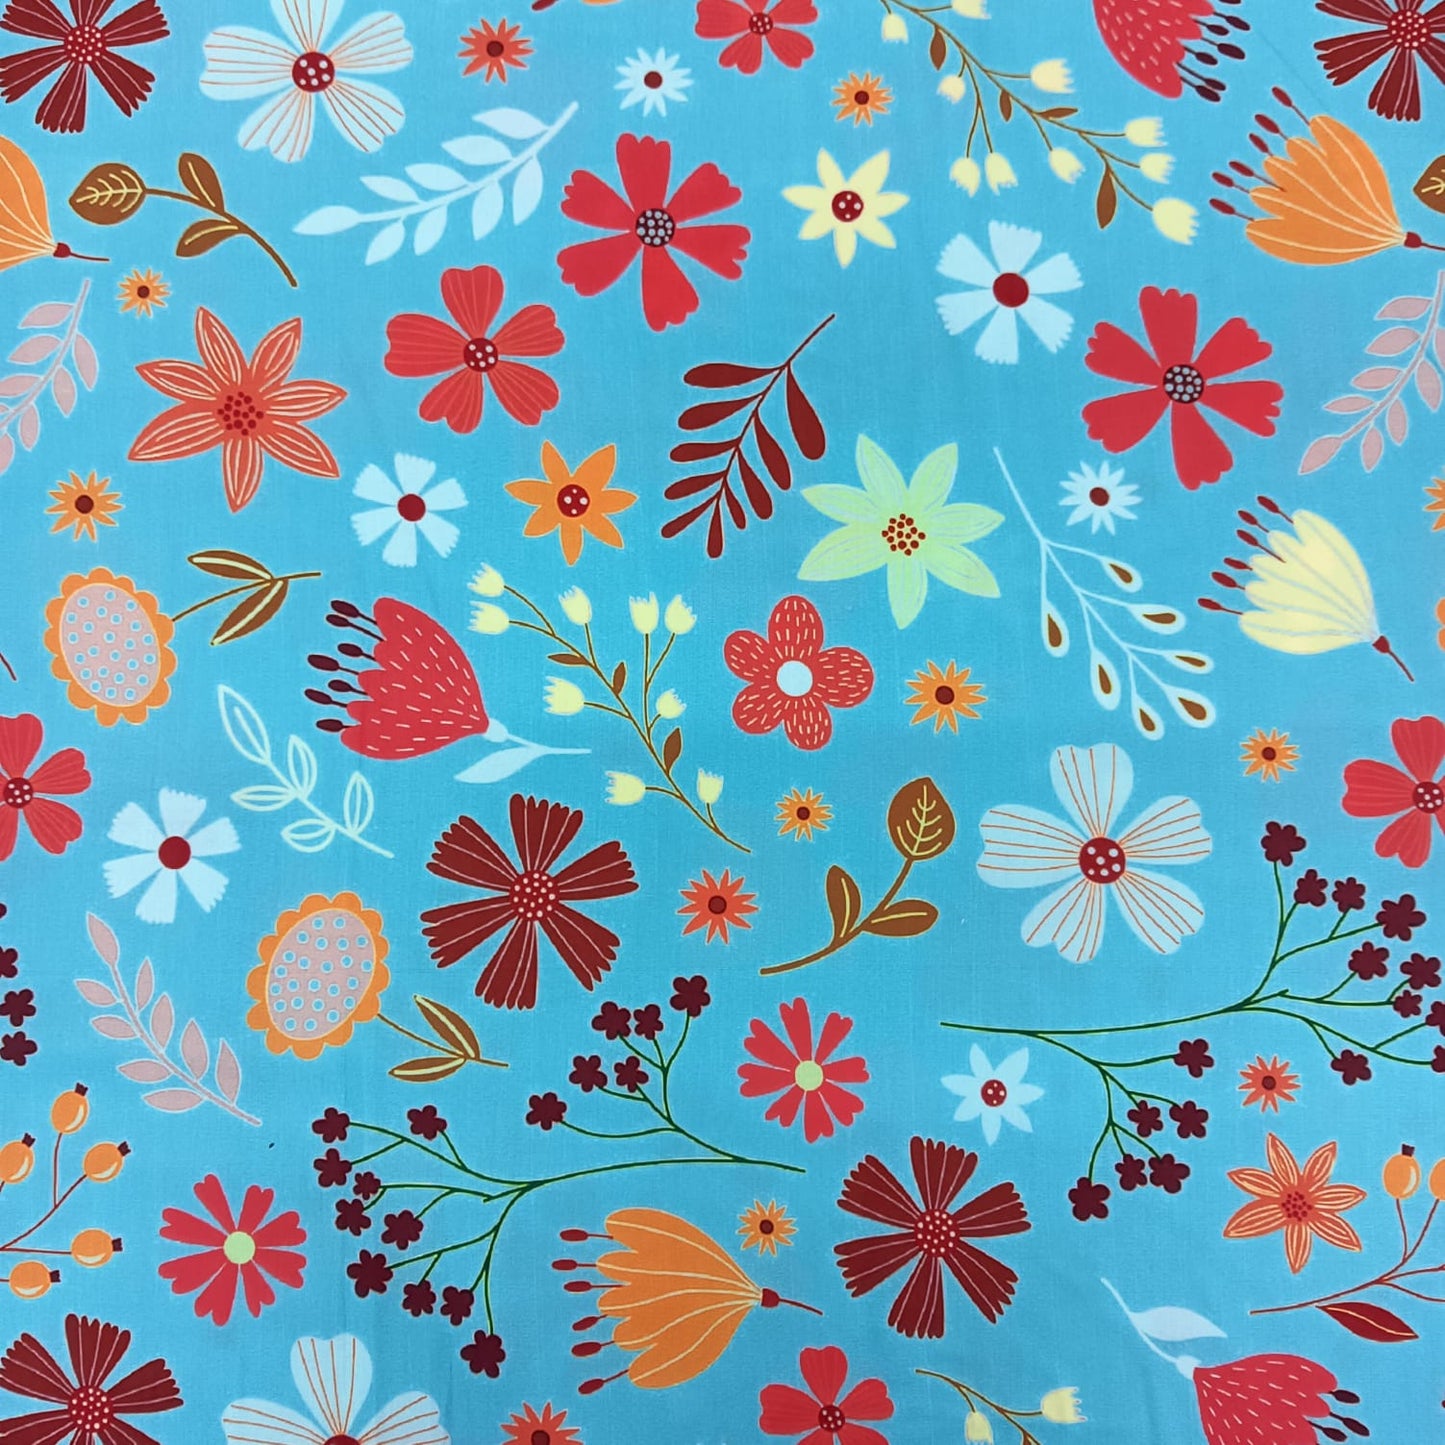 Cotton popline 58" Fabric - Signature Floral in blue base